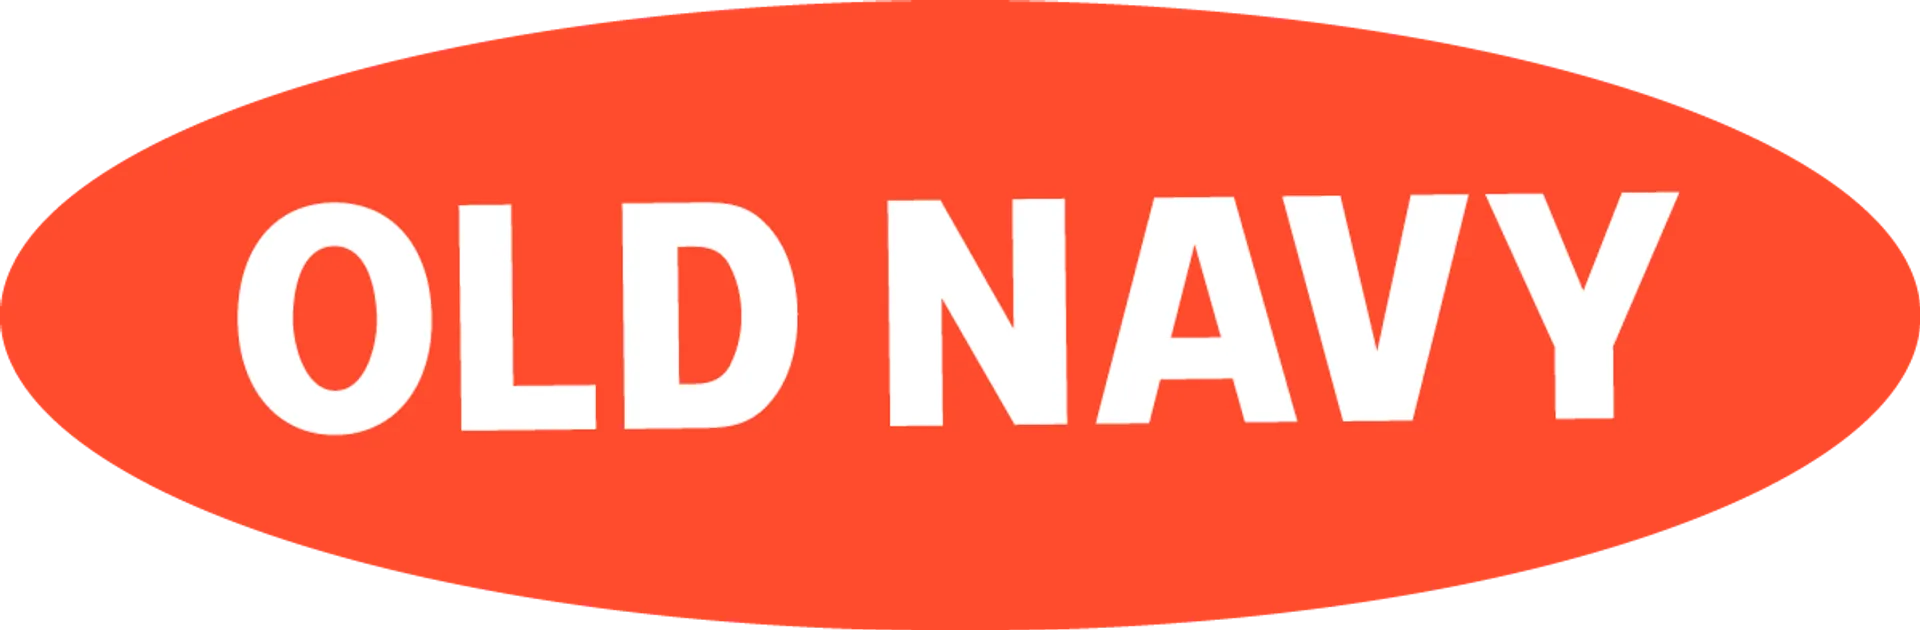 OLD NAVY logo de circulaires